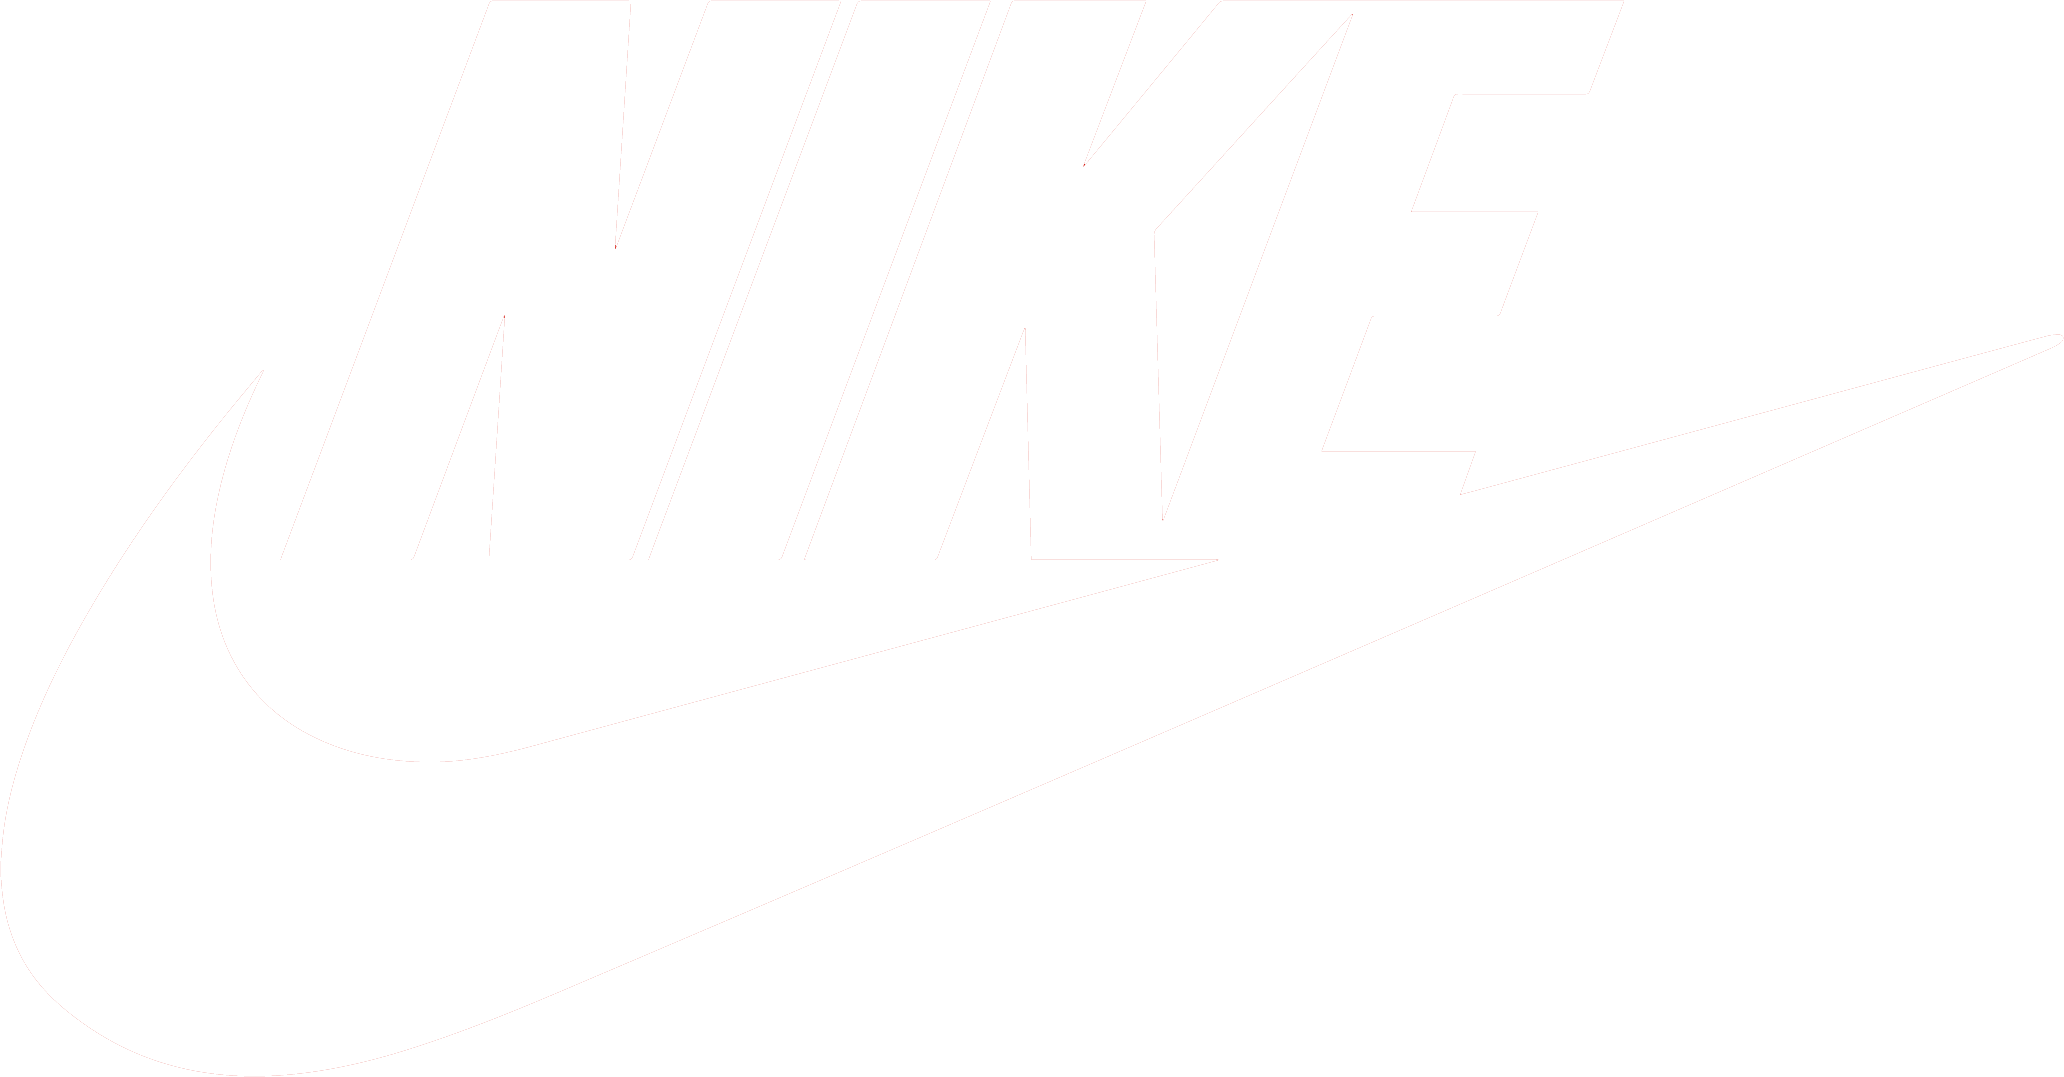 Nike logo PNG images Download 